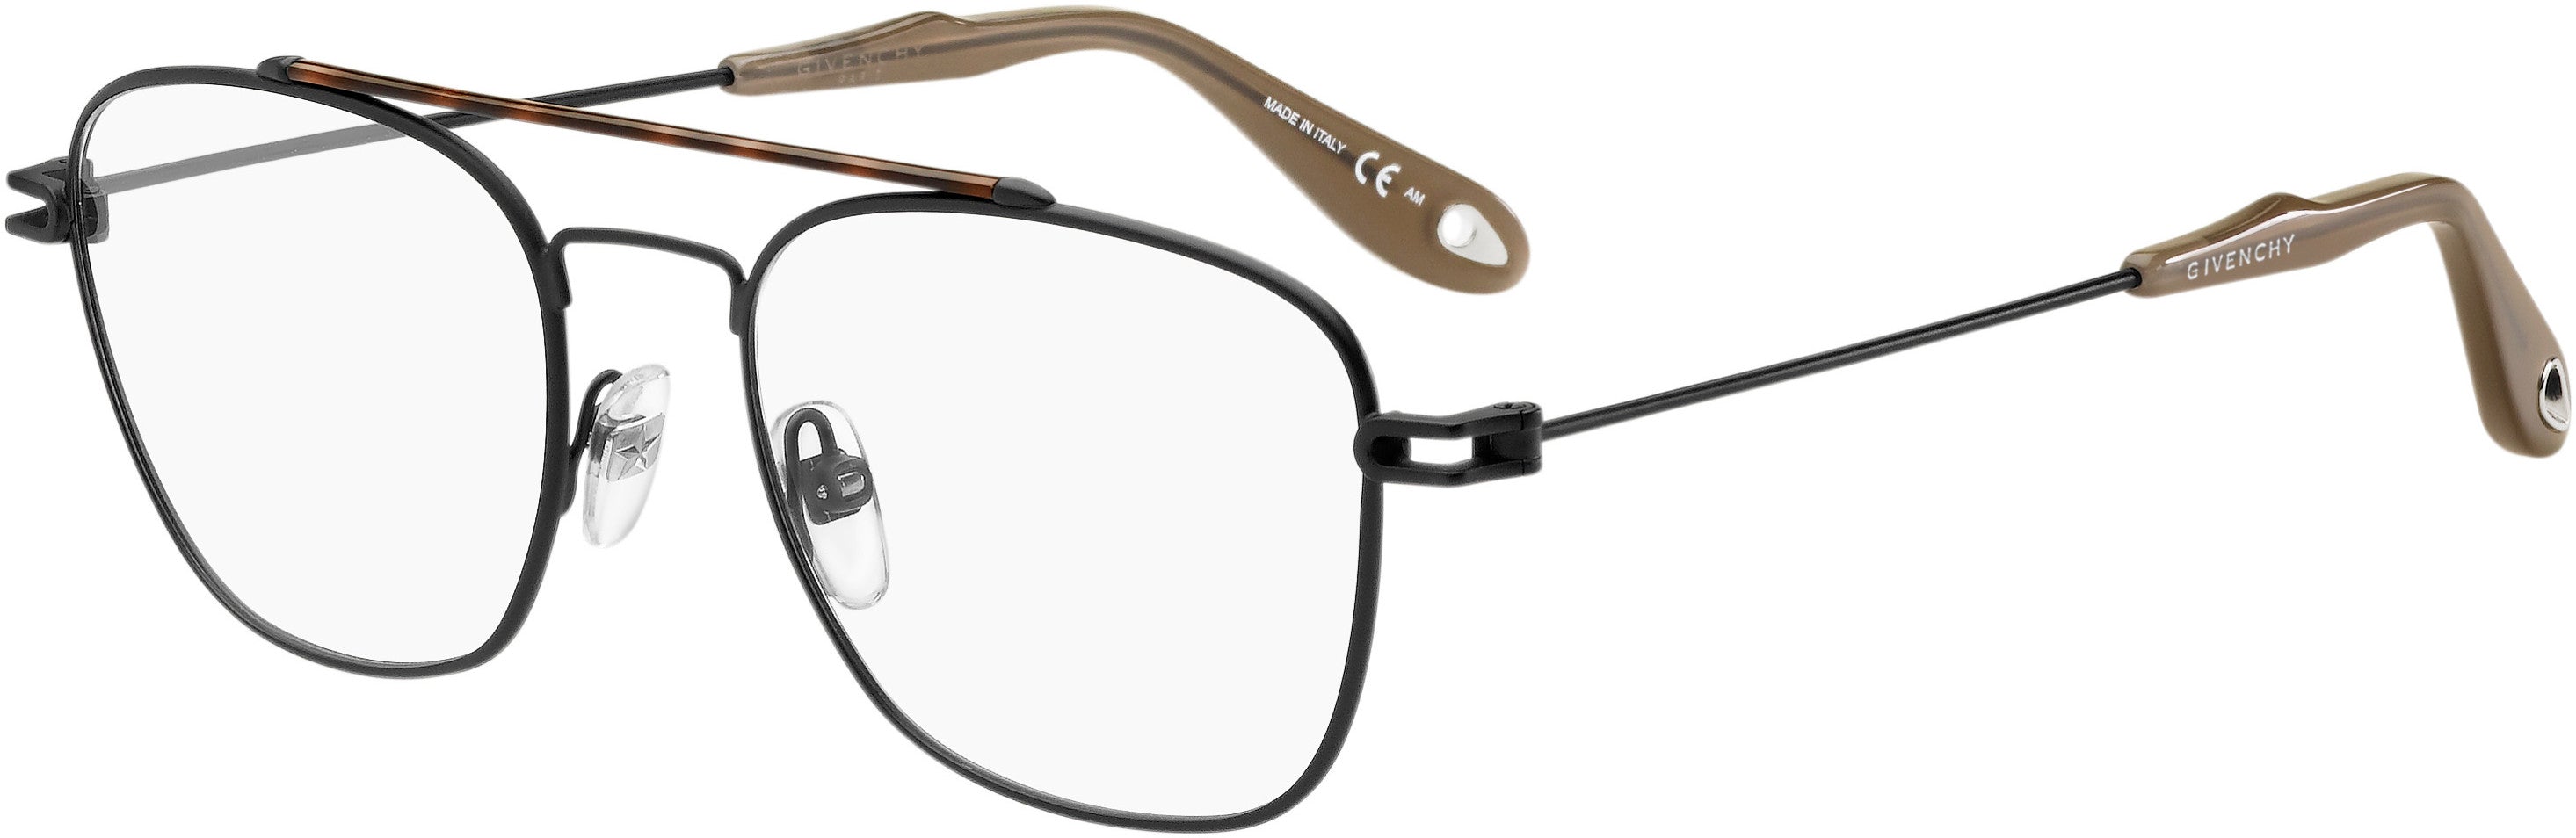  Givenchy 0053 Rectangular Eyeglasses 0003-0003  Matte Black (00 Demo Lens)